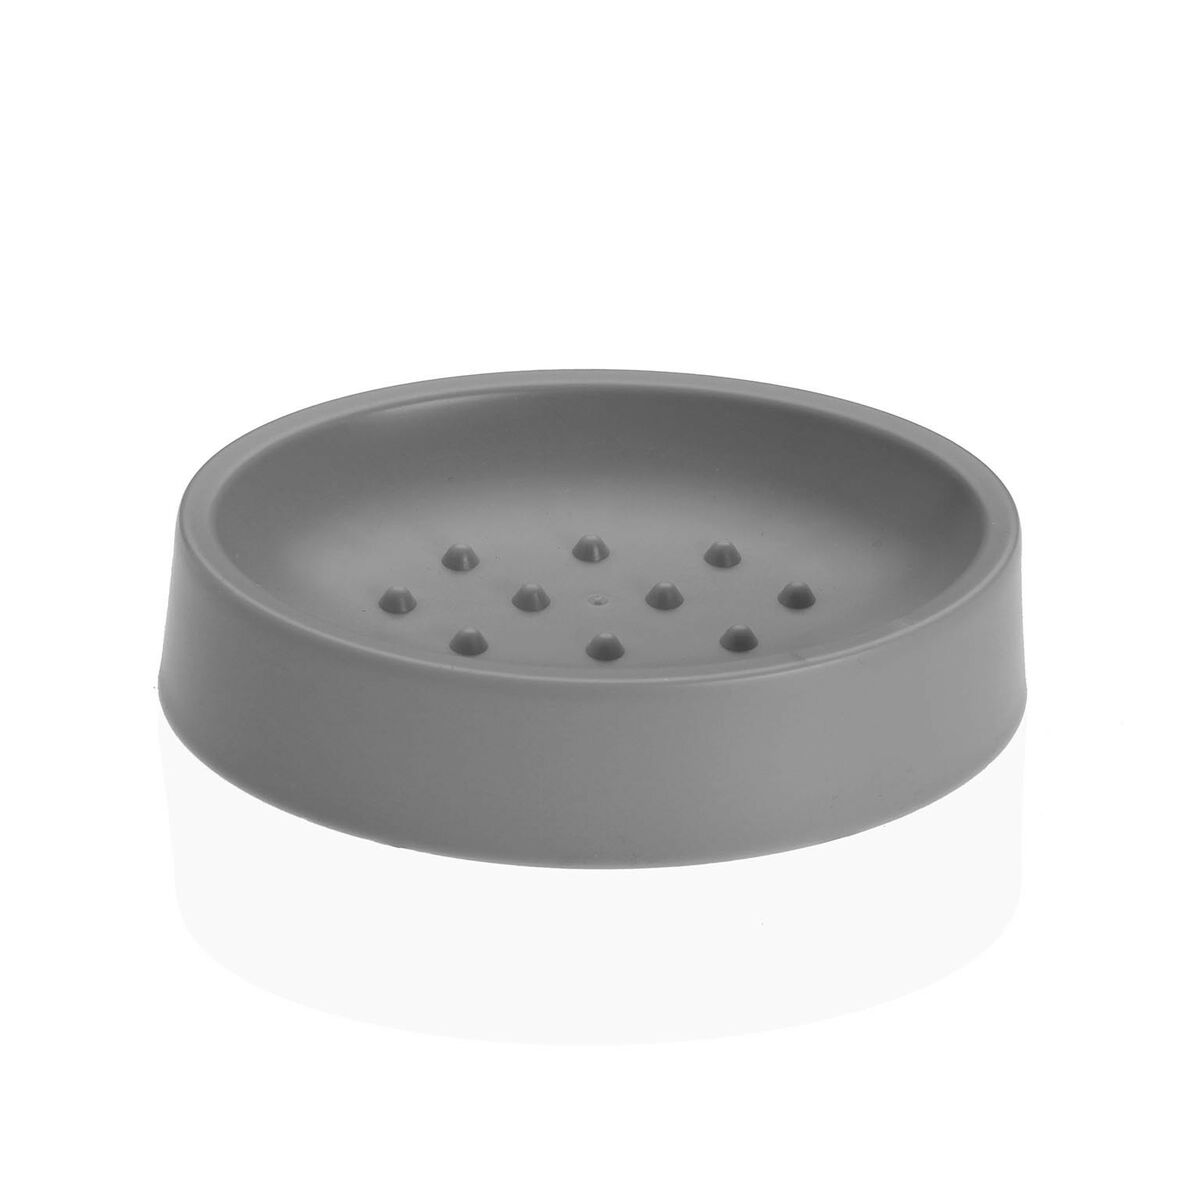 Bathroom set grey